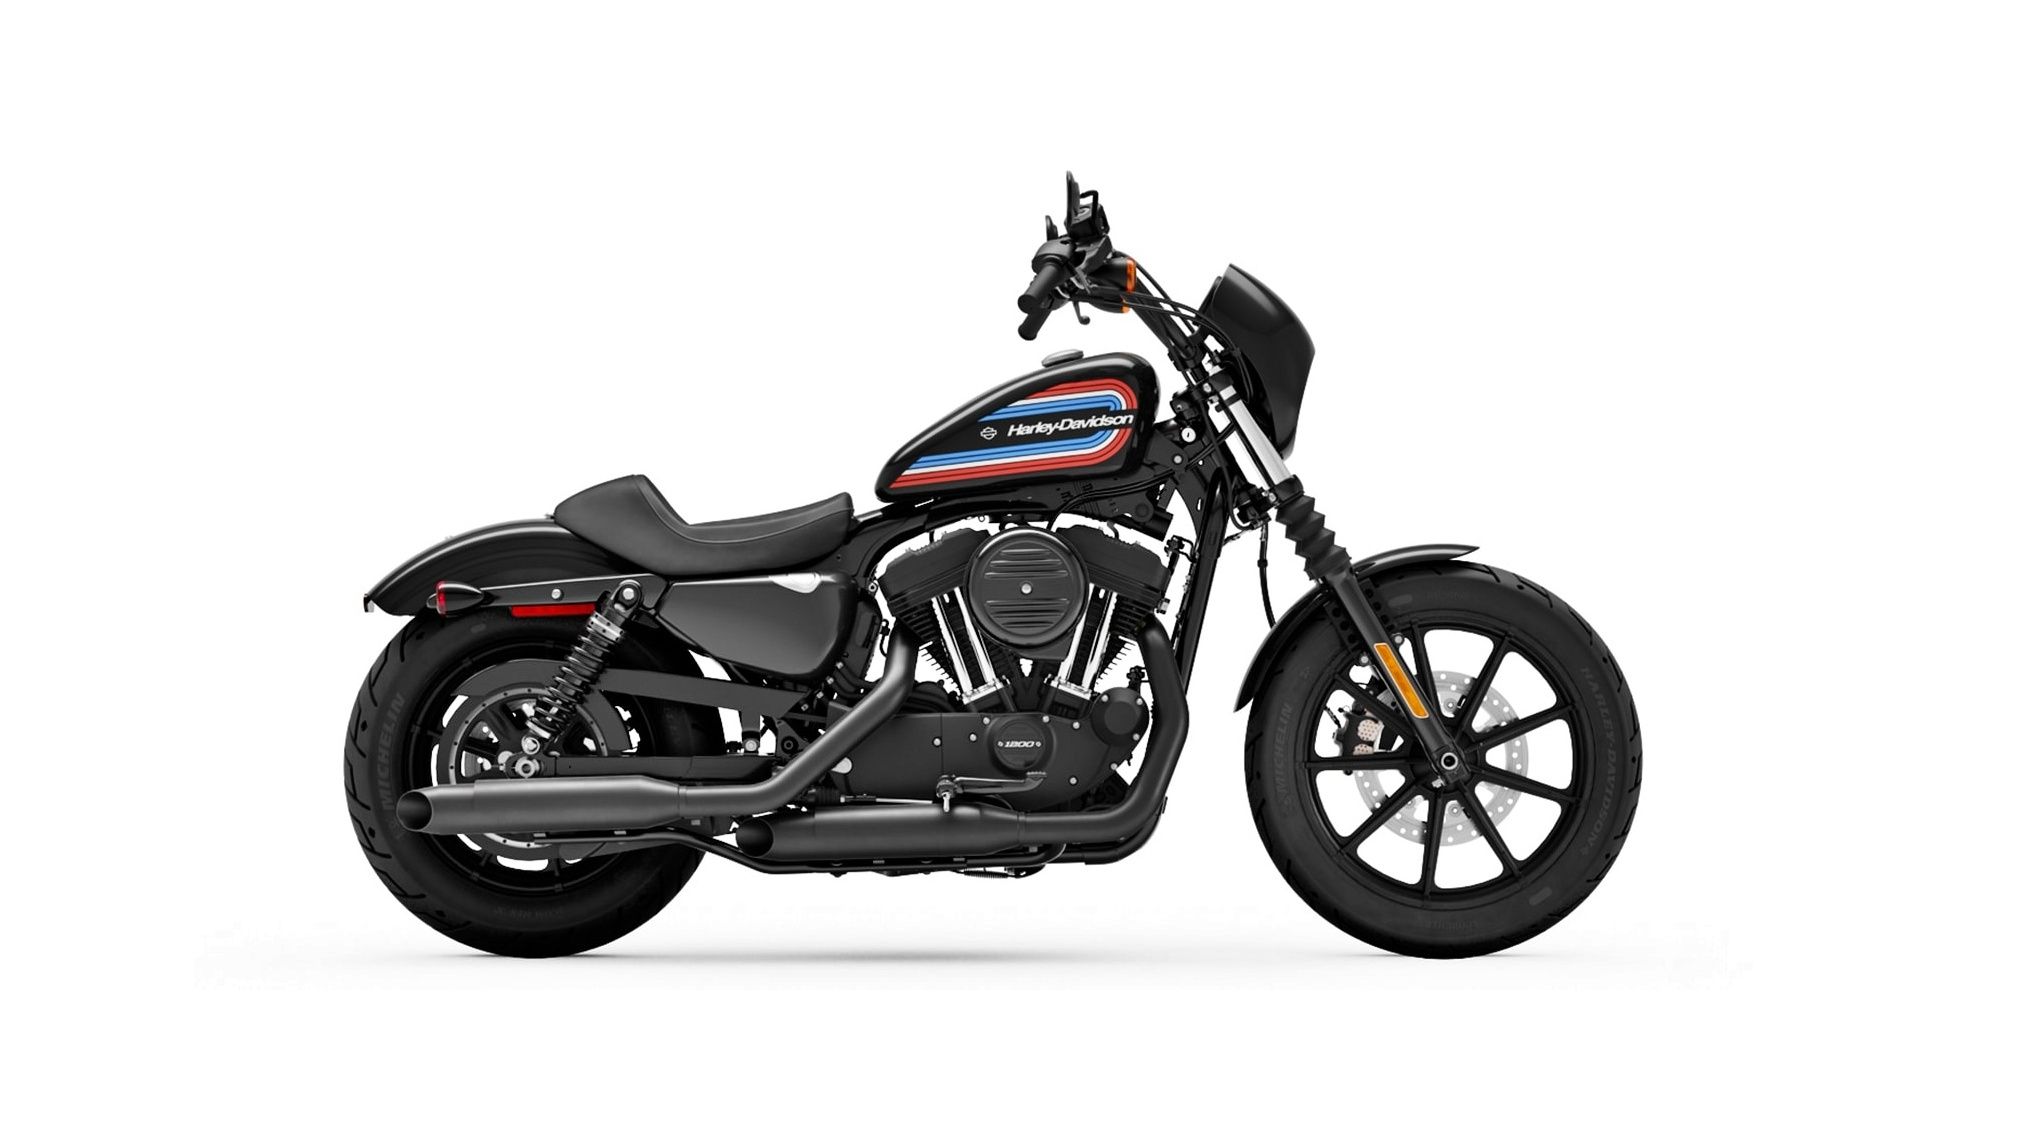 A black Harley-Davidson Iron 1200